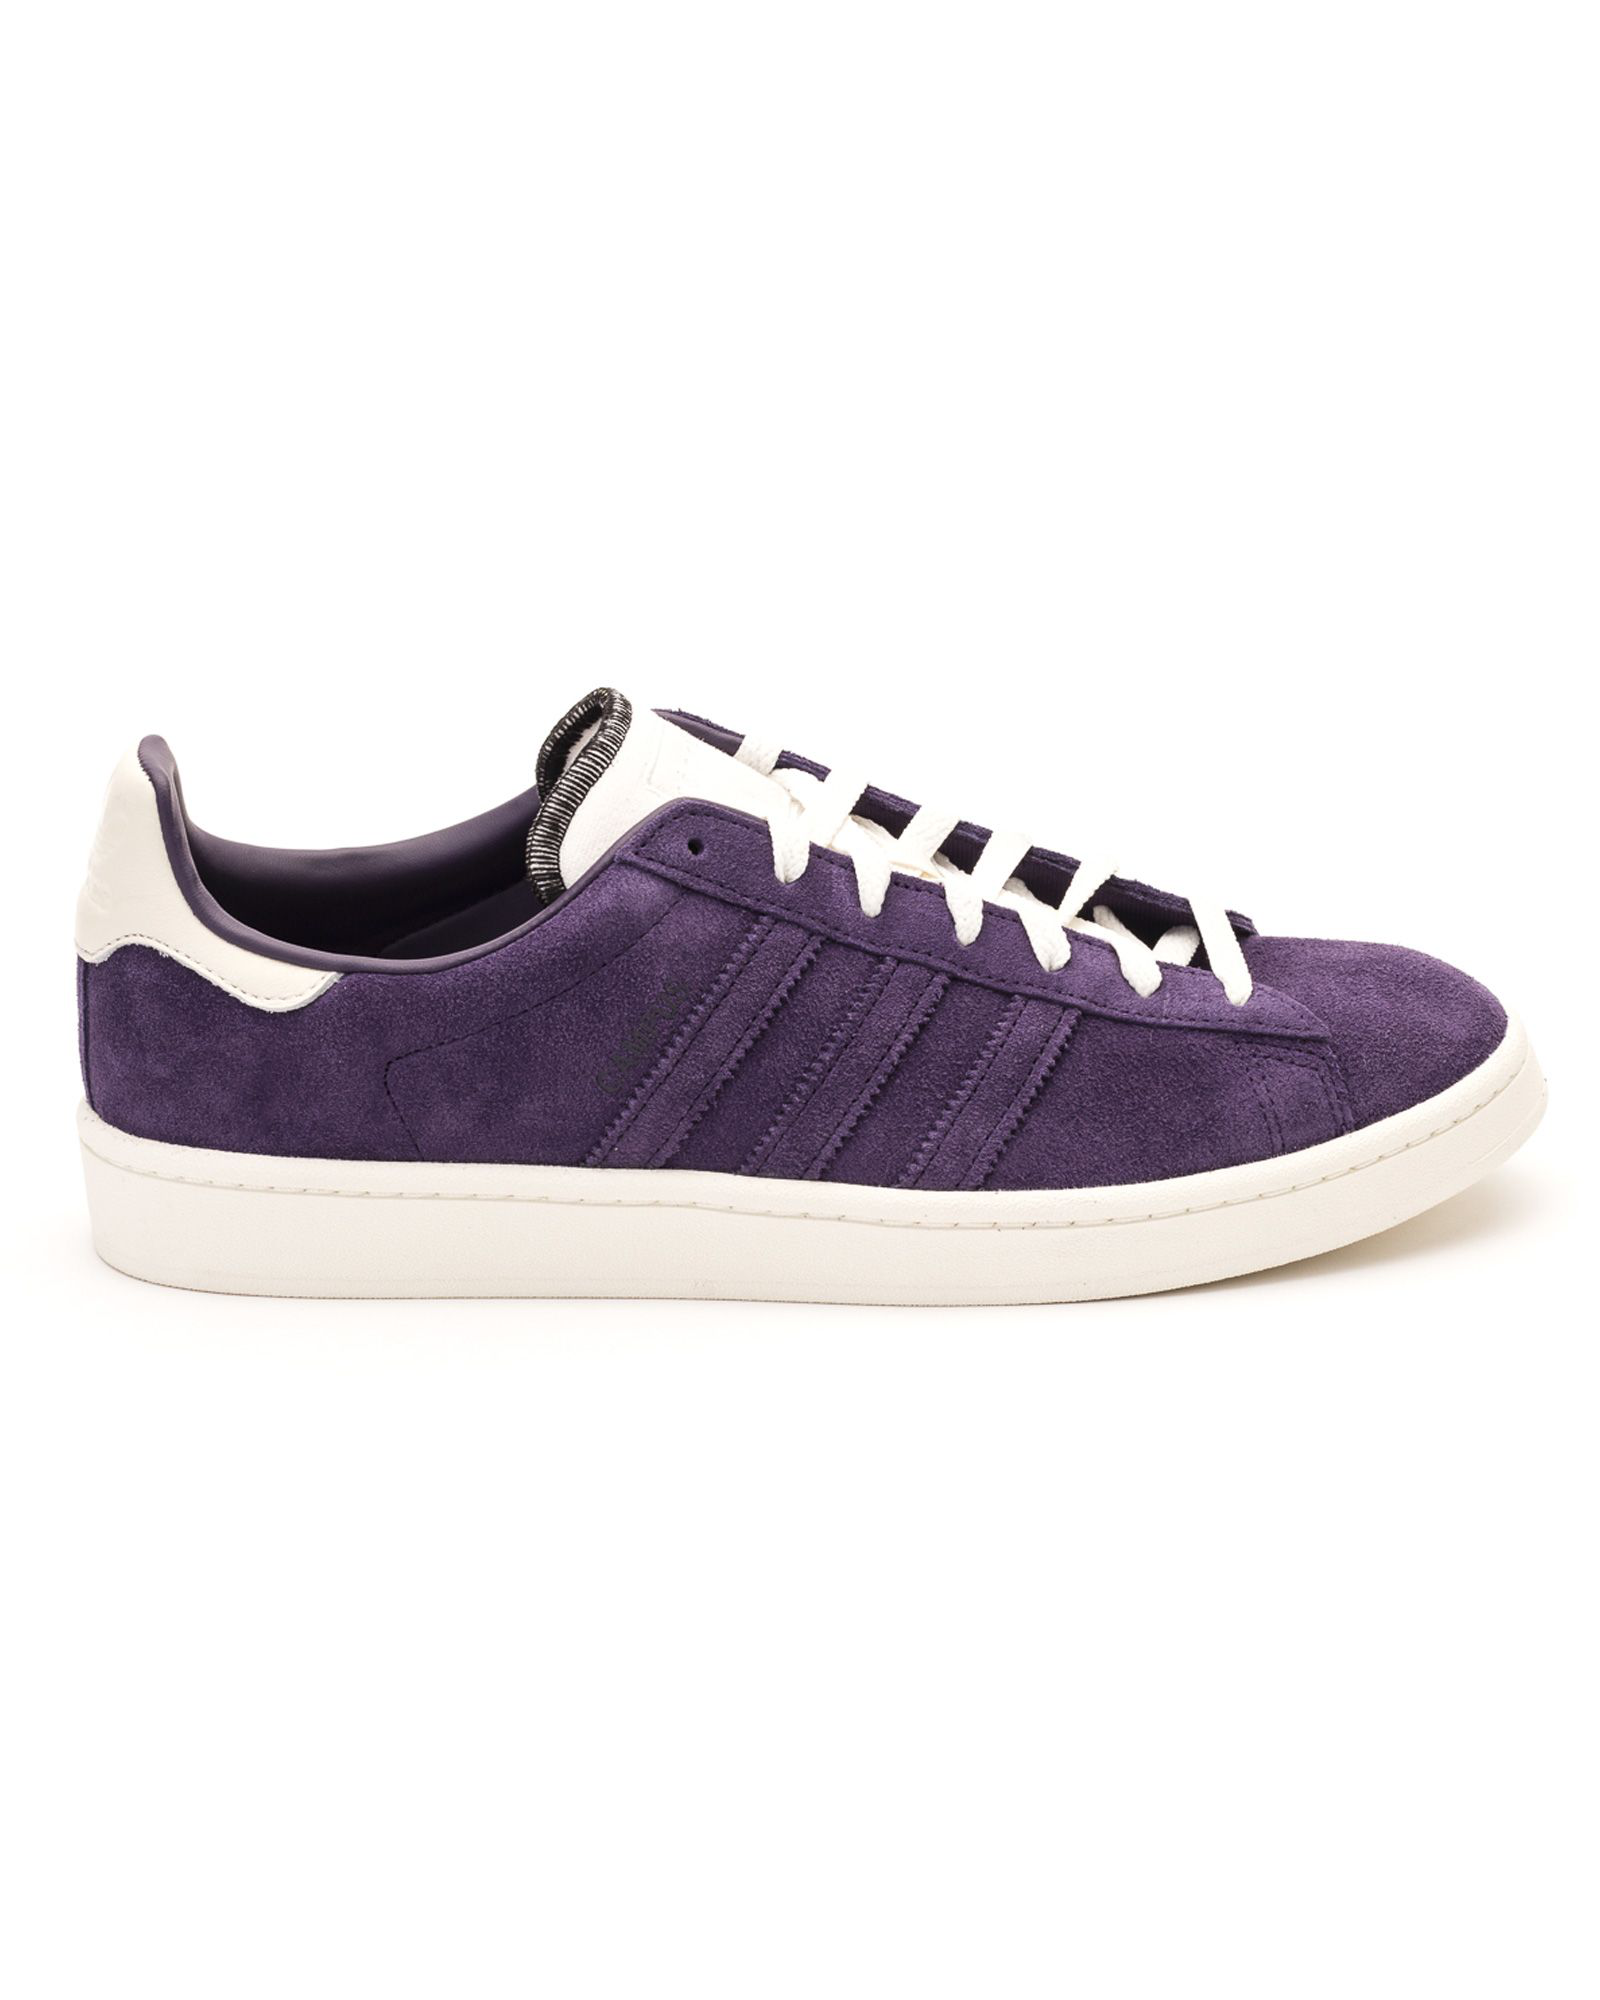 Adidas Originals Campus Suede Sneakers In Purple | ModeSens